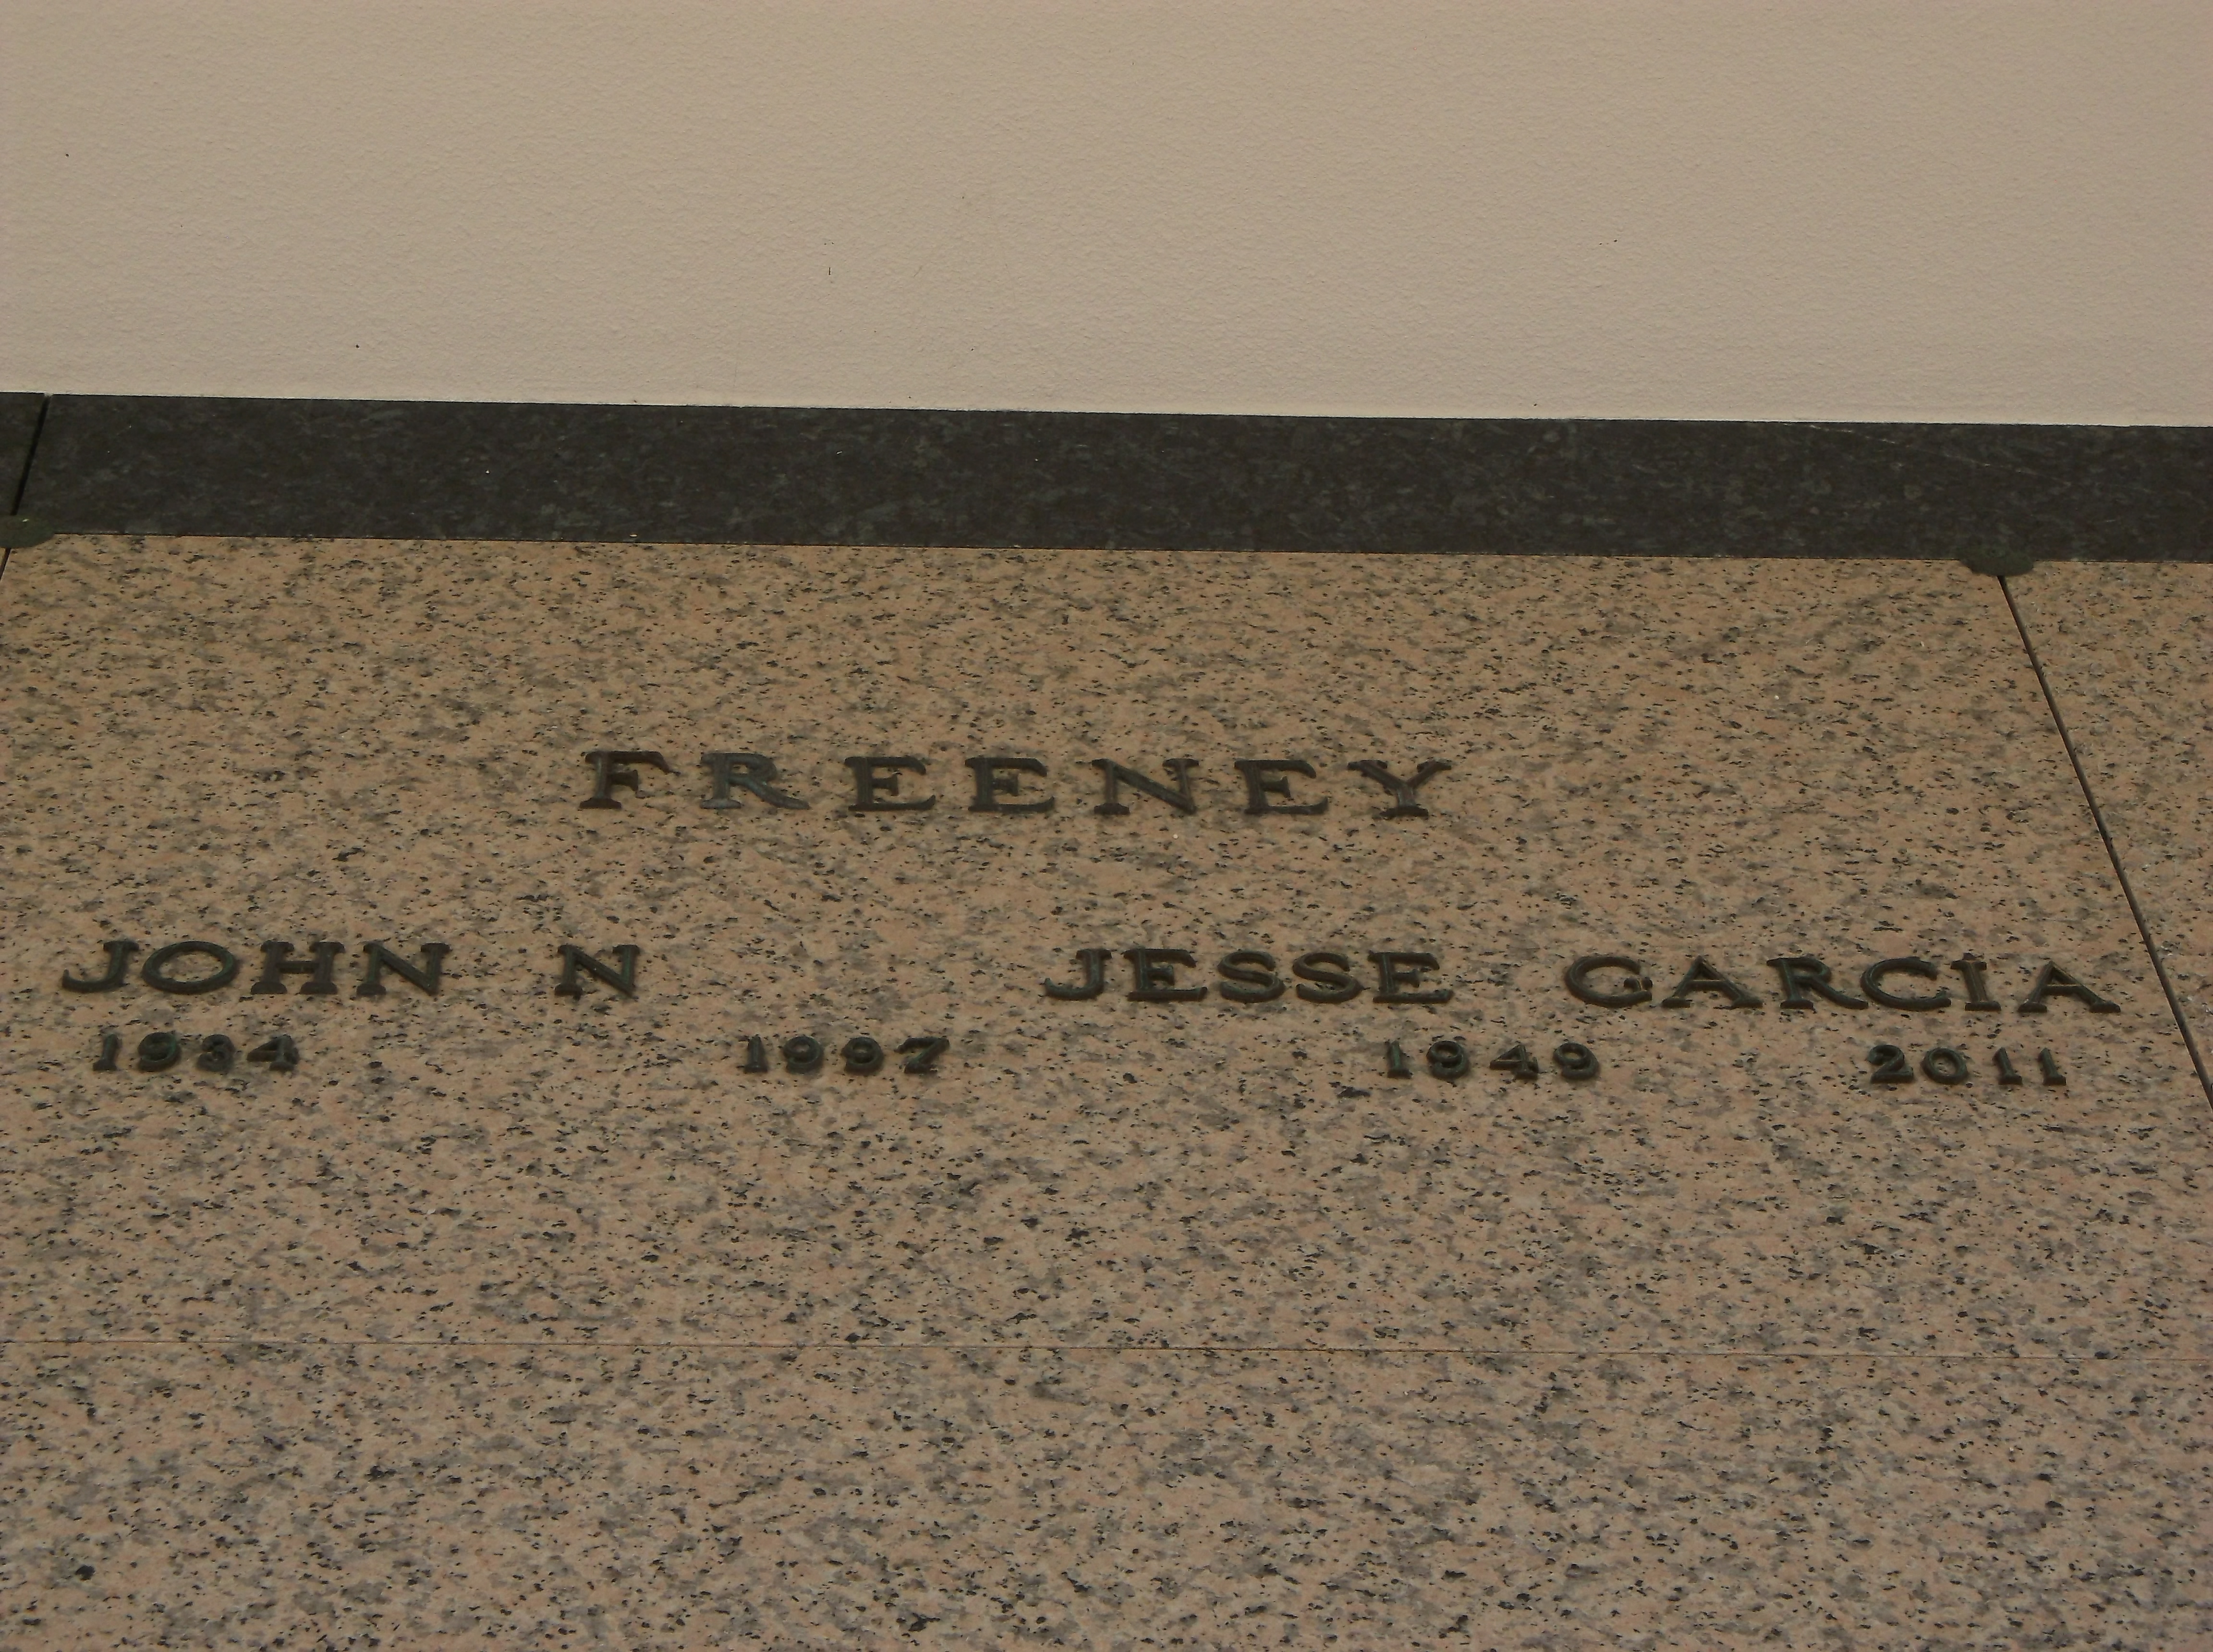 John N Freeney